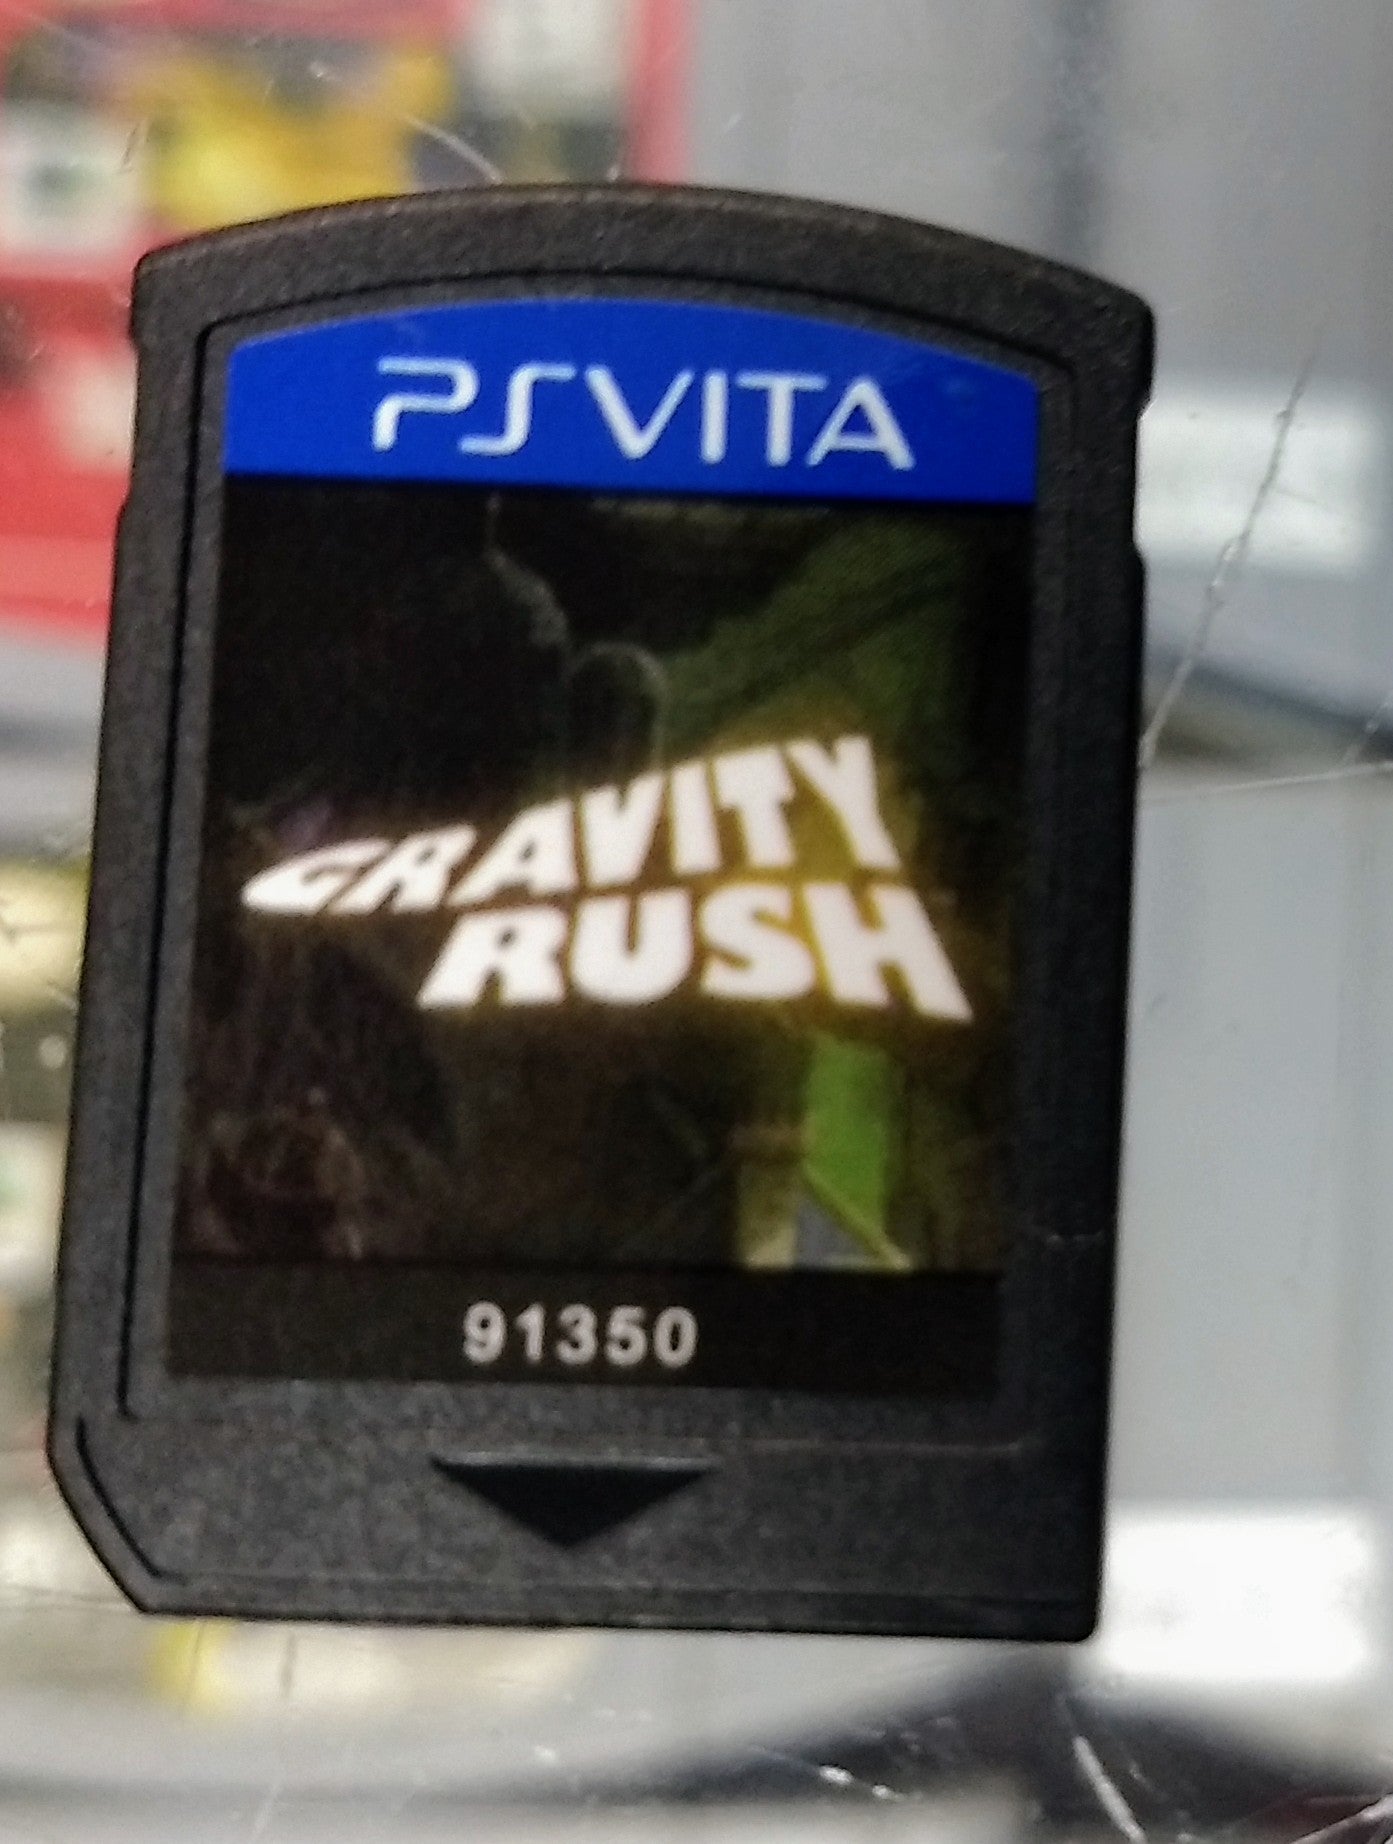 GRAVITY RUSH PLAYSTATION VITA - jeux video game-x